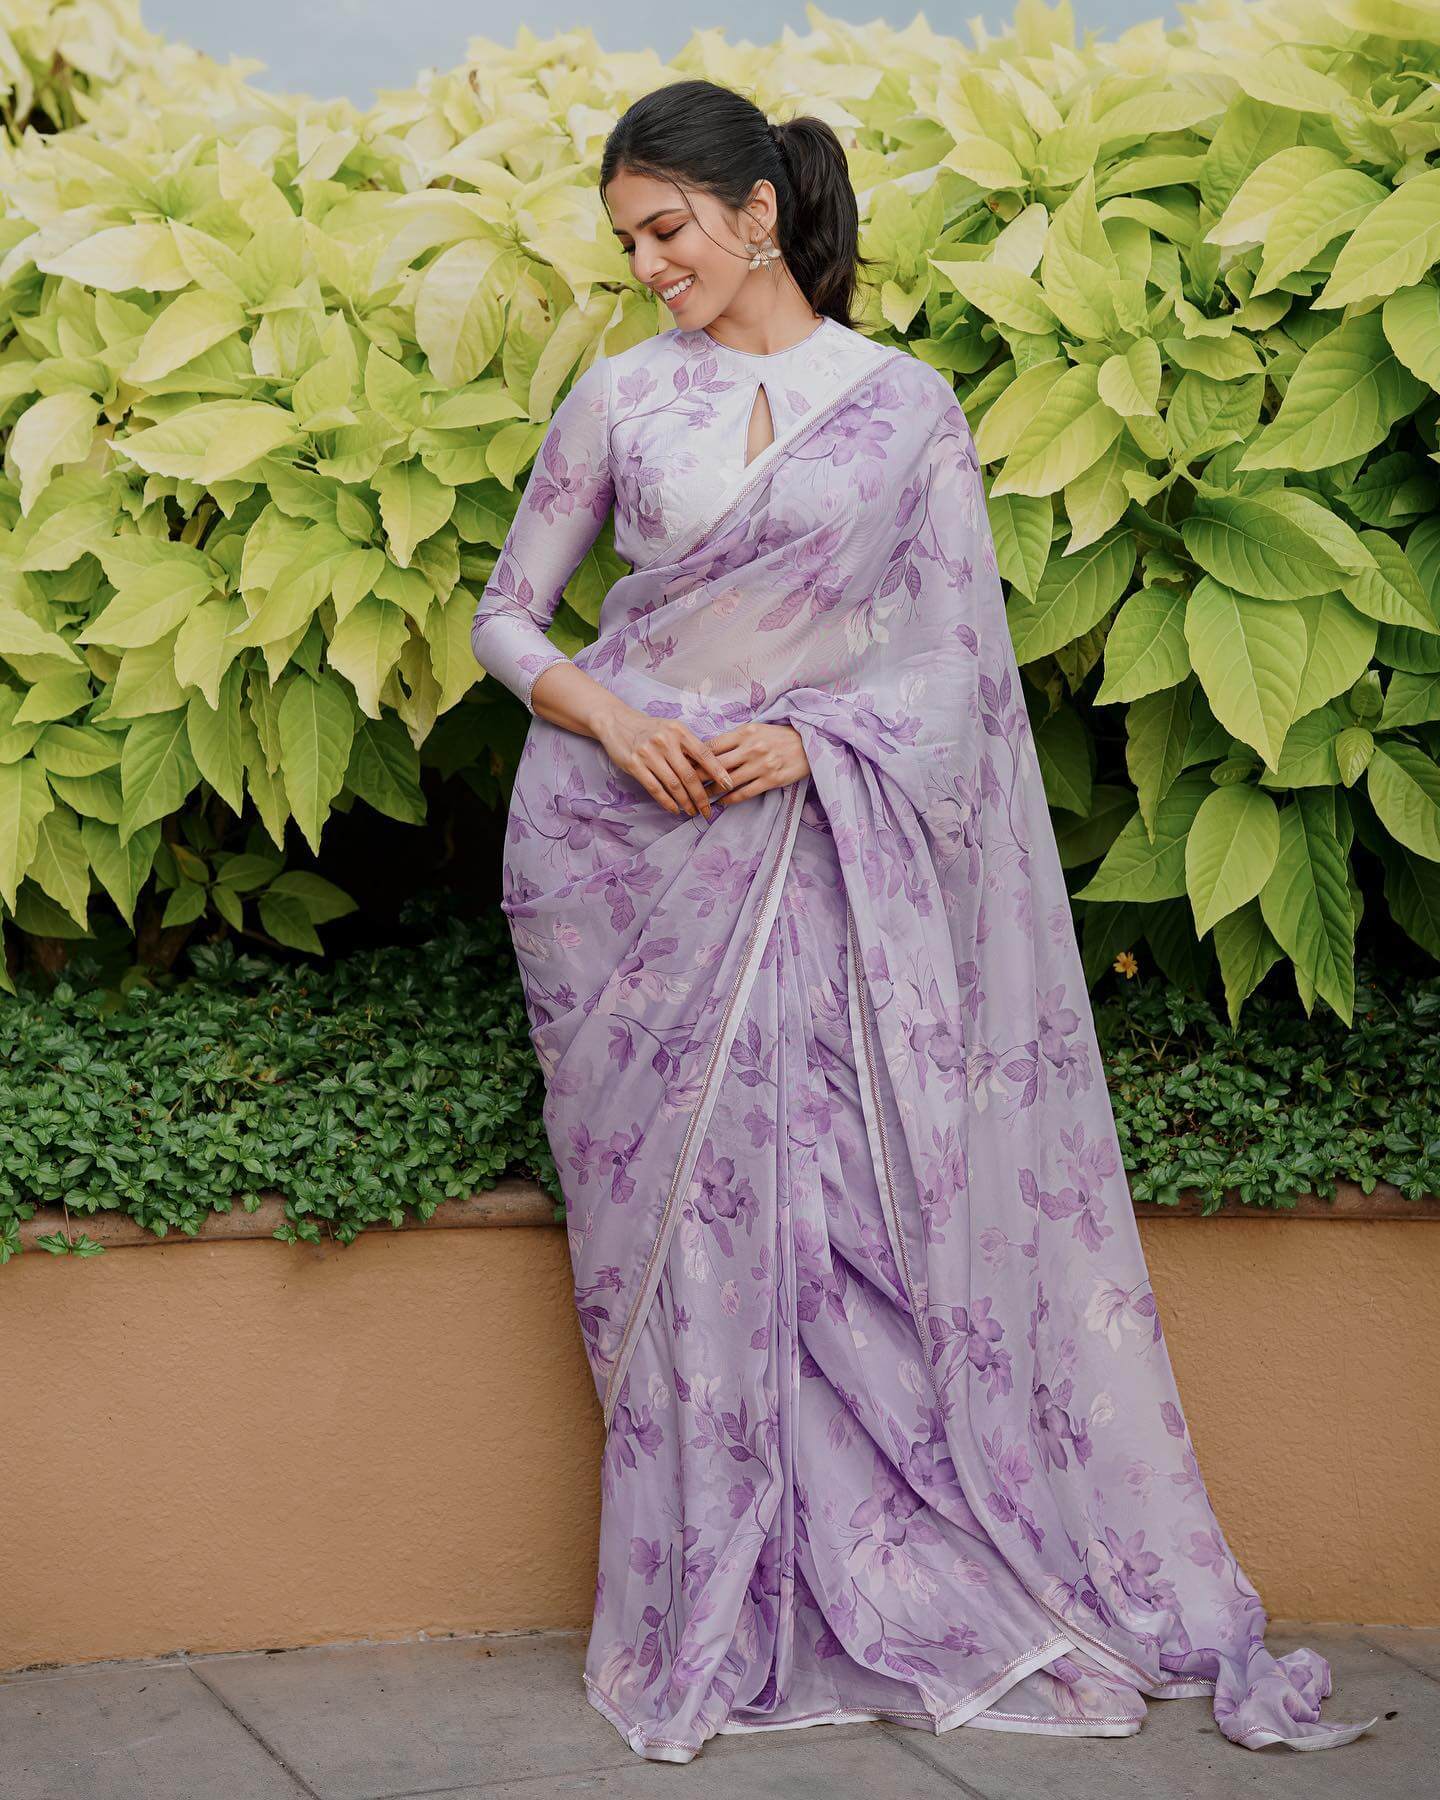 Malavika Mohanan In Chic & Elegant Lavender Chiffon Floral Print Saree Look